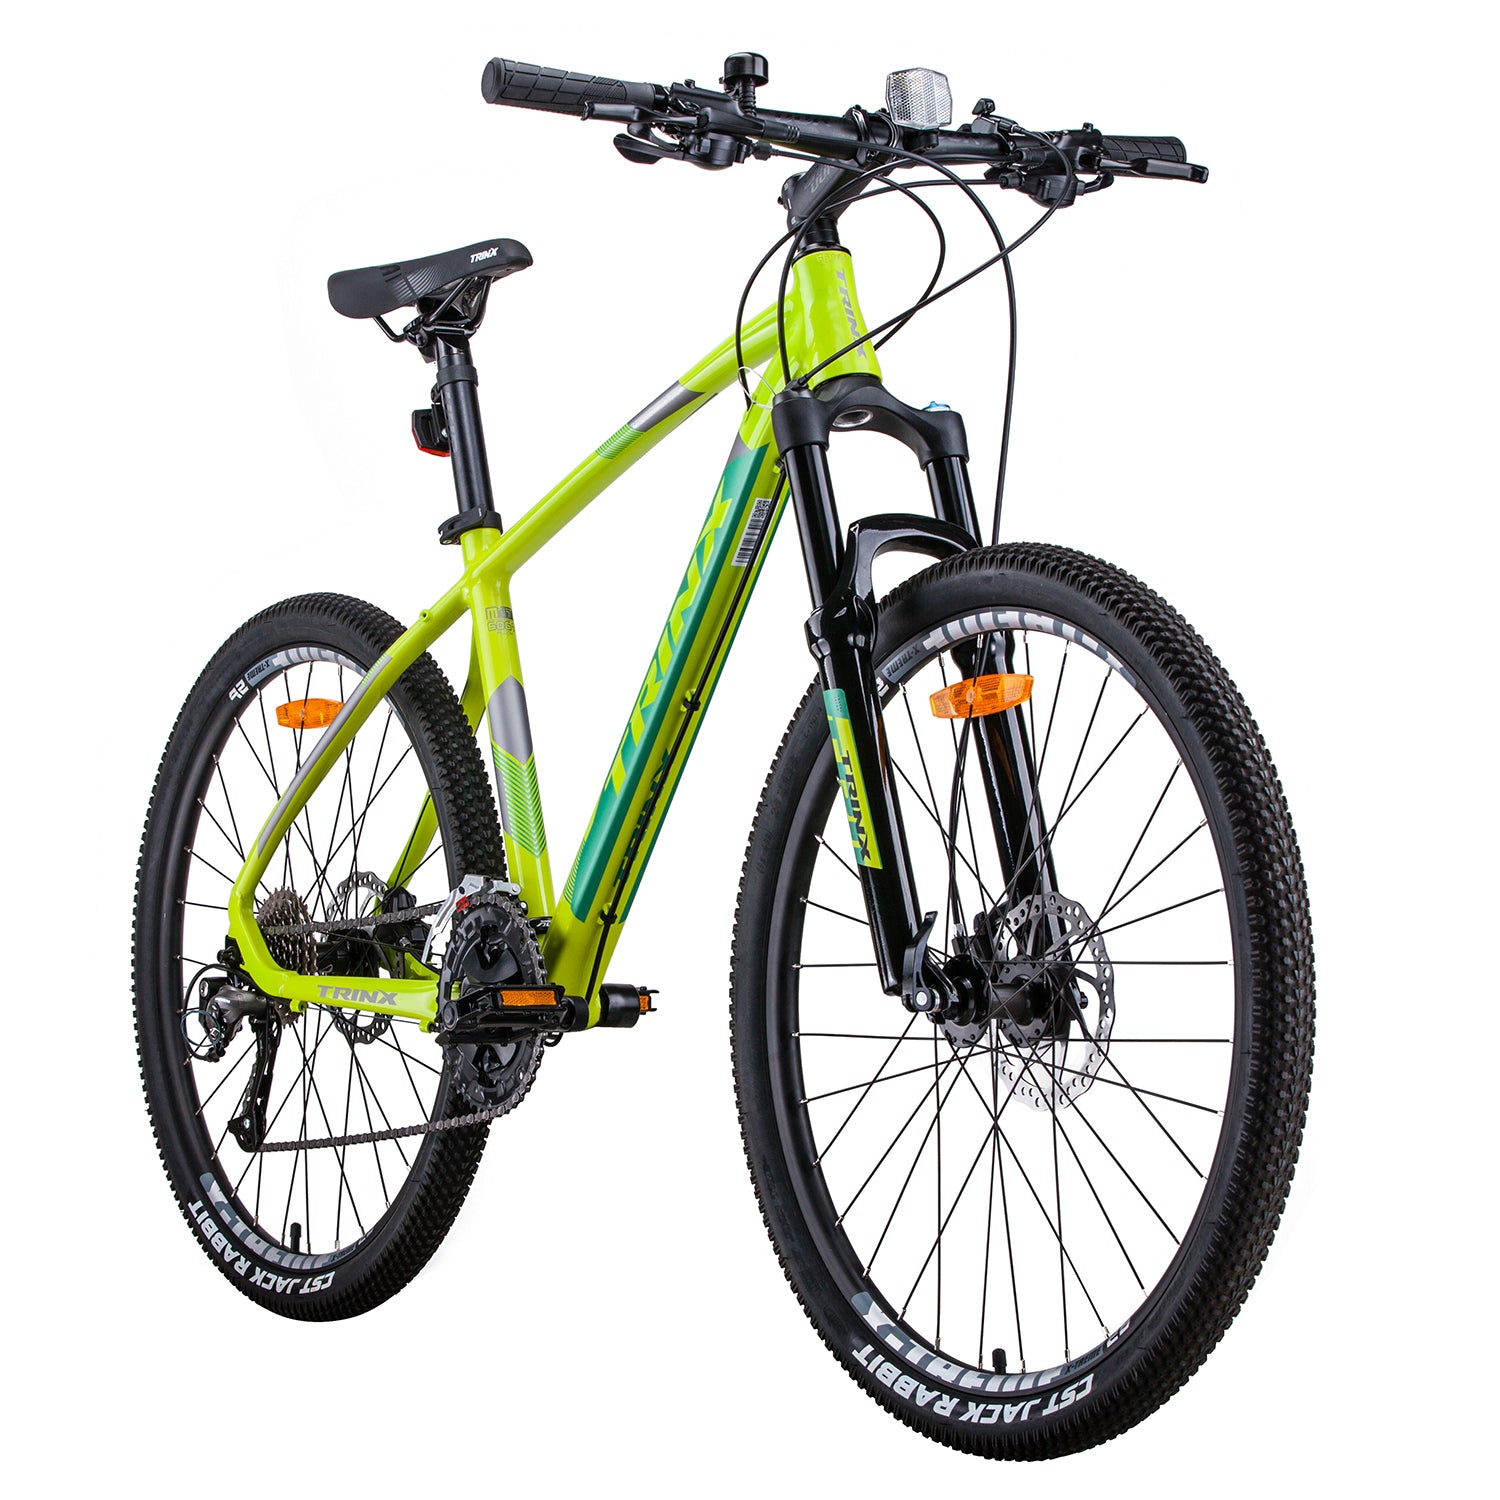 Trinx X1 MTB Mountain Bike Shimano Altus M370 27 Speed 17 Inches Frame Yellow/Grey Green